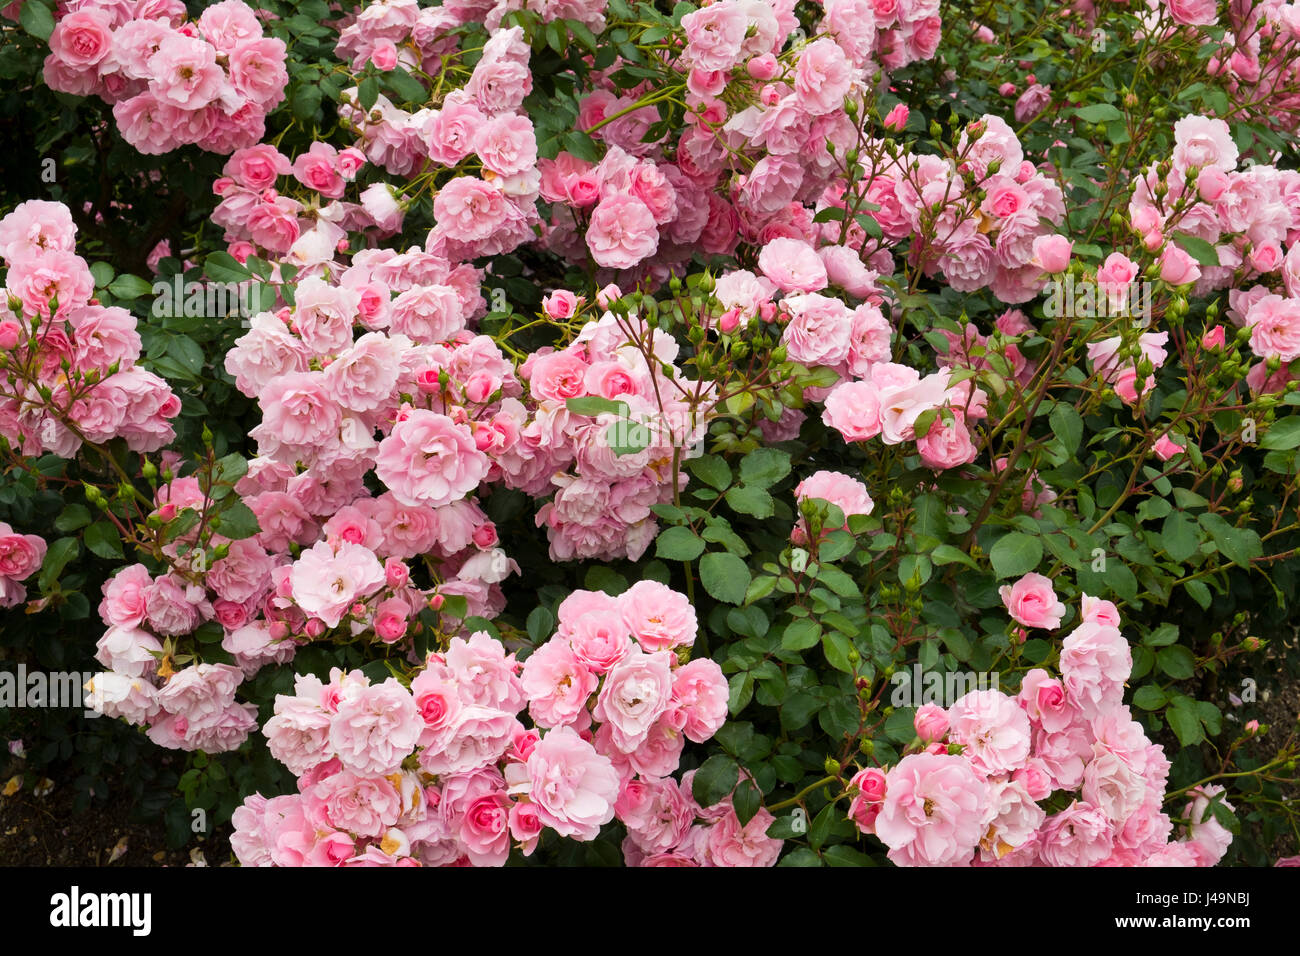 Profuse bussola rosa rose fioritura Foto Stock